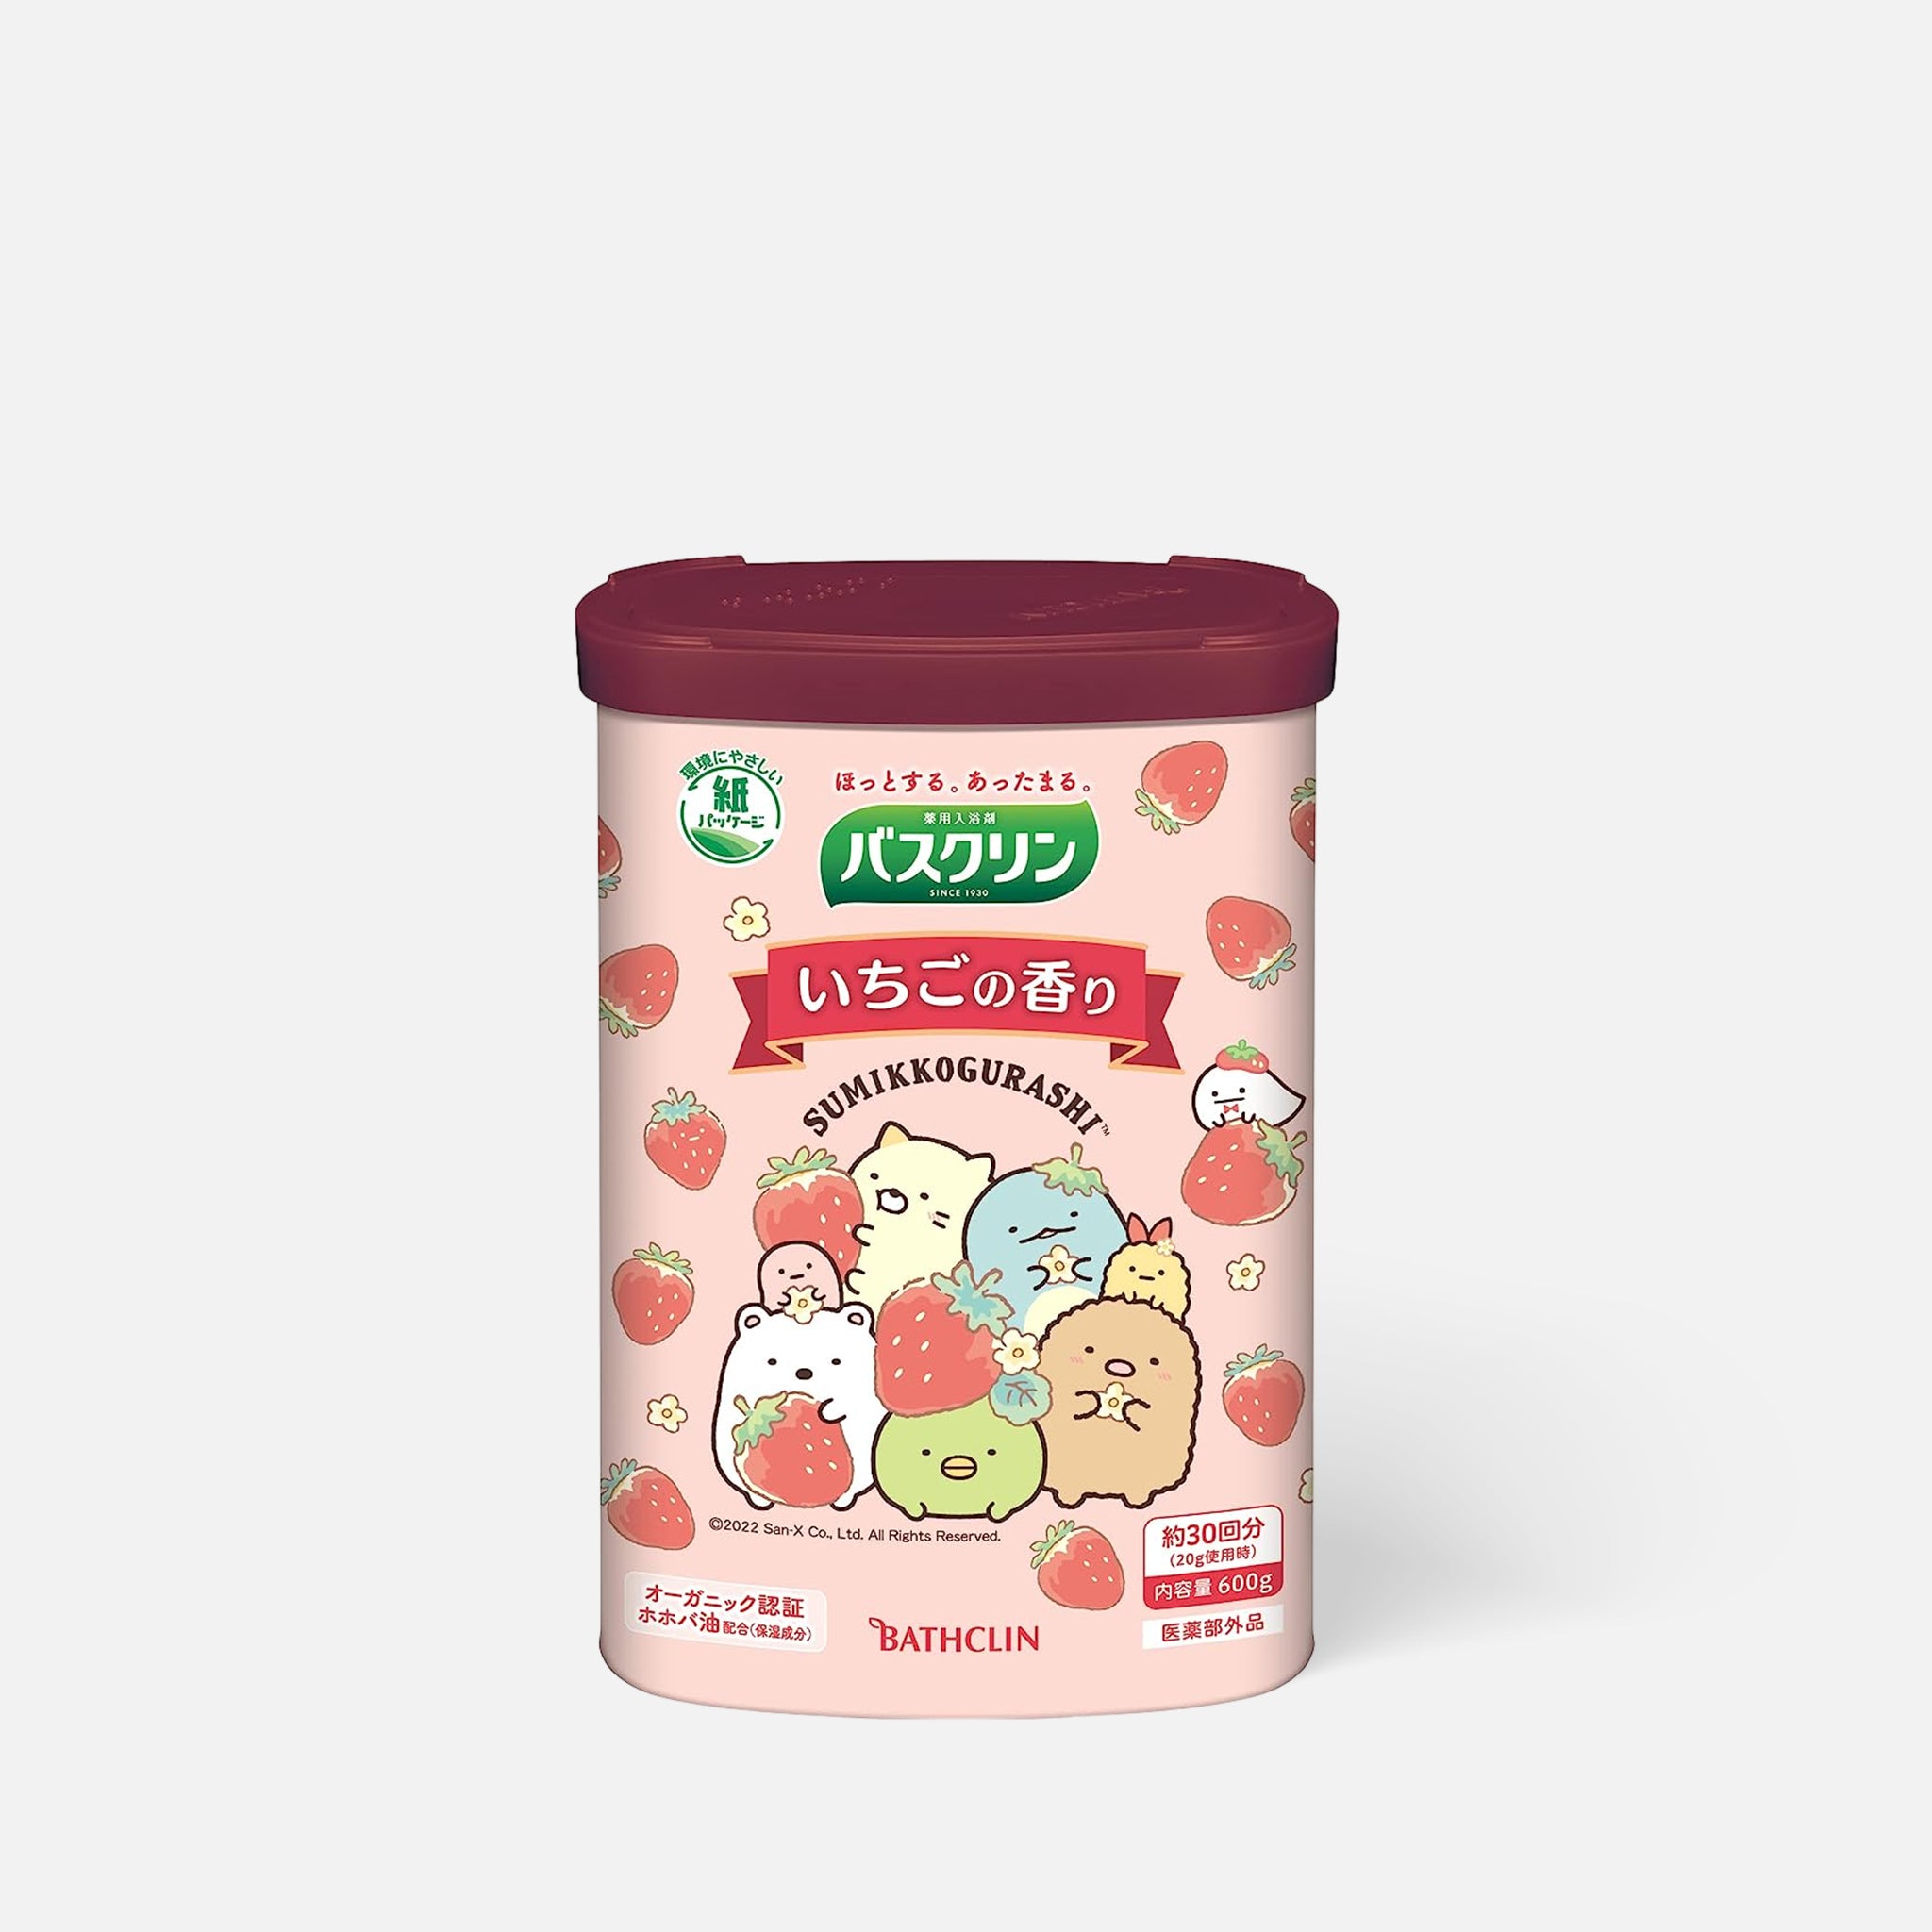 BATHCLIN Sumikko Gurashi Design Bath Salt Strawberry Scent 600g